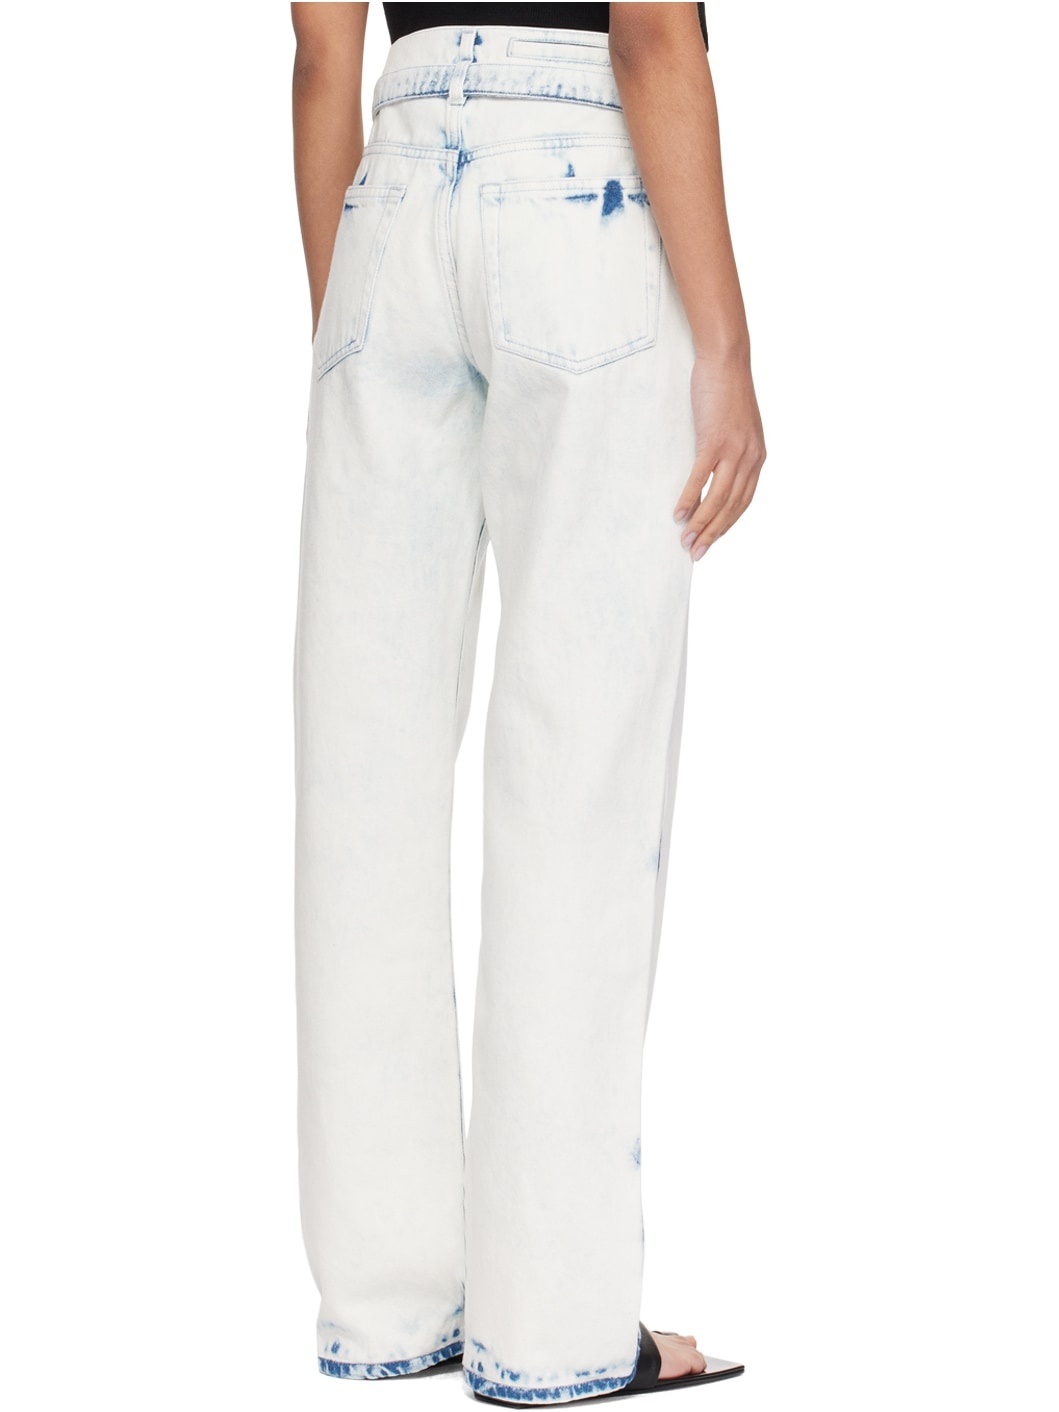 White & Indigo Ellsworth Jeans - 3